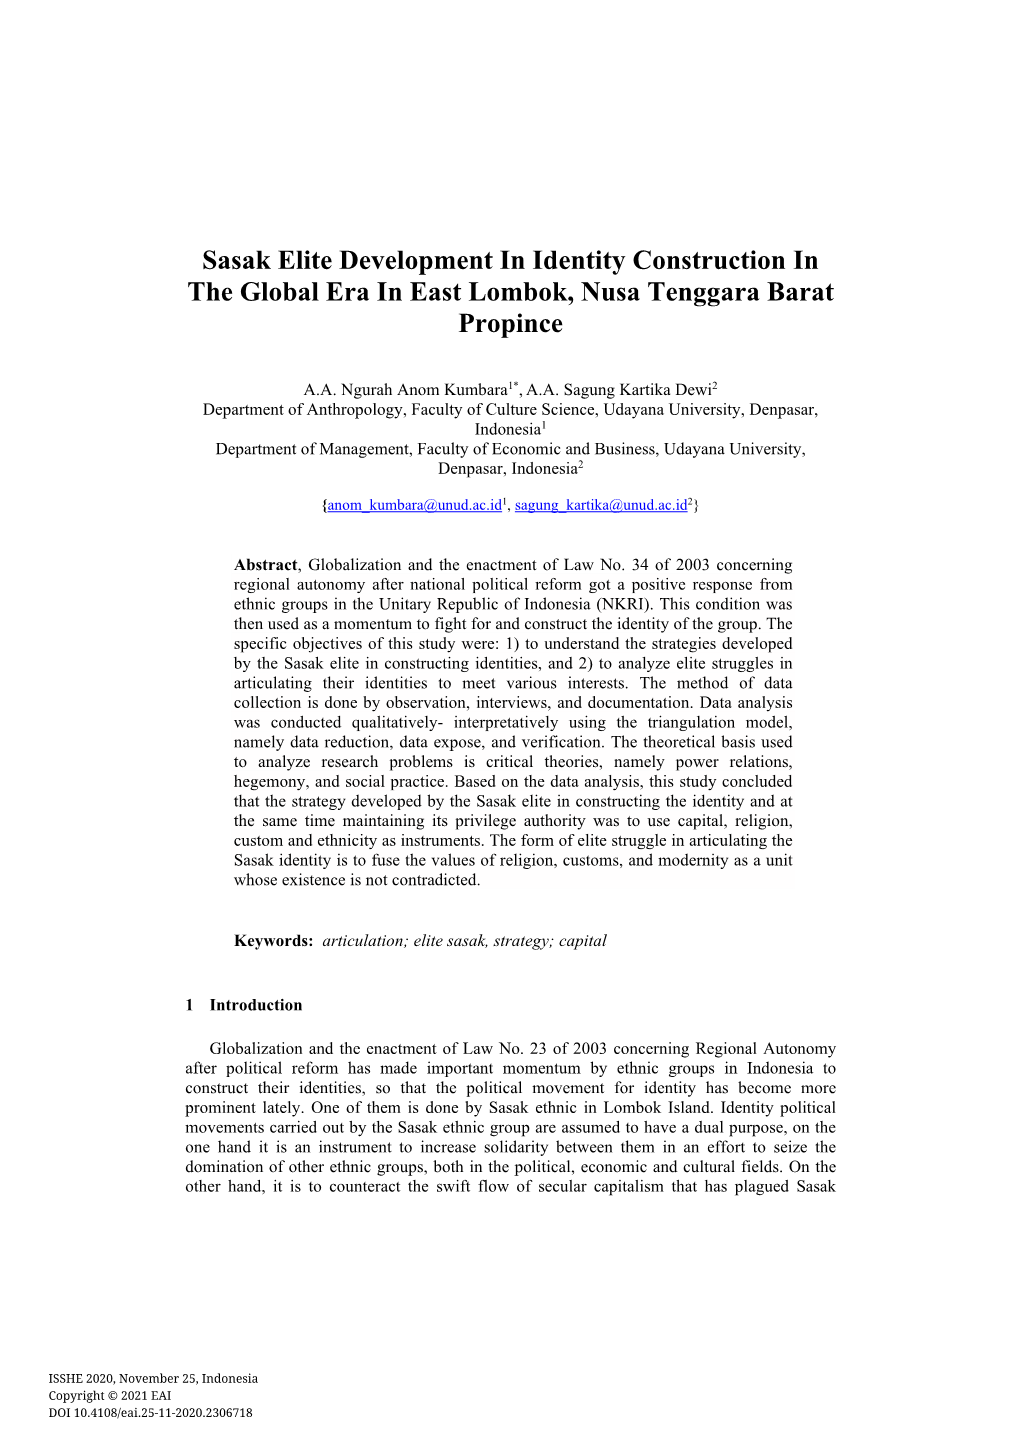 Sasak Elite Development in Identity Construction in the Global Era in East Lombok, Nusa Tenggara Barat Propince